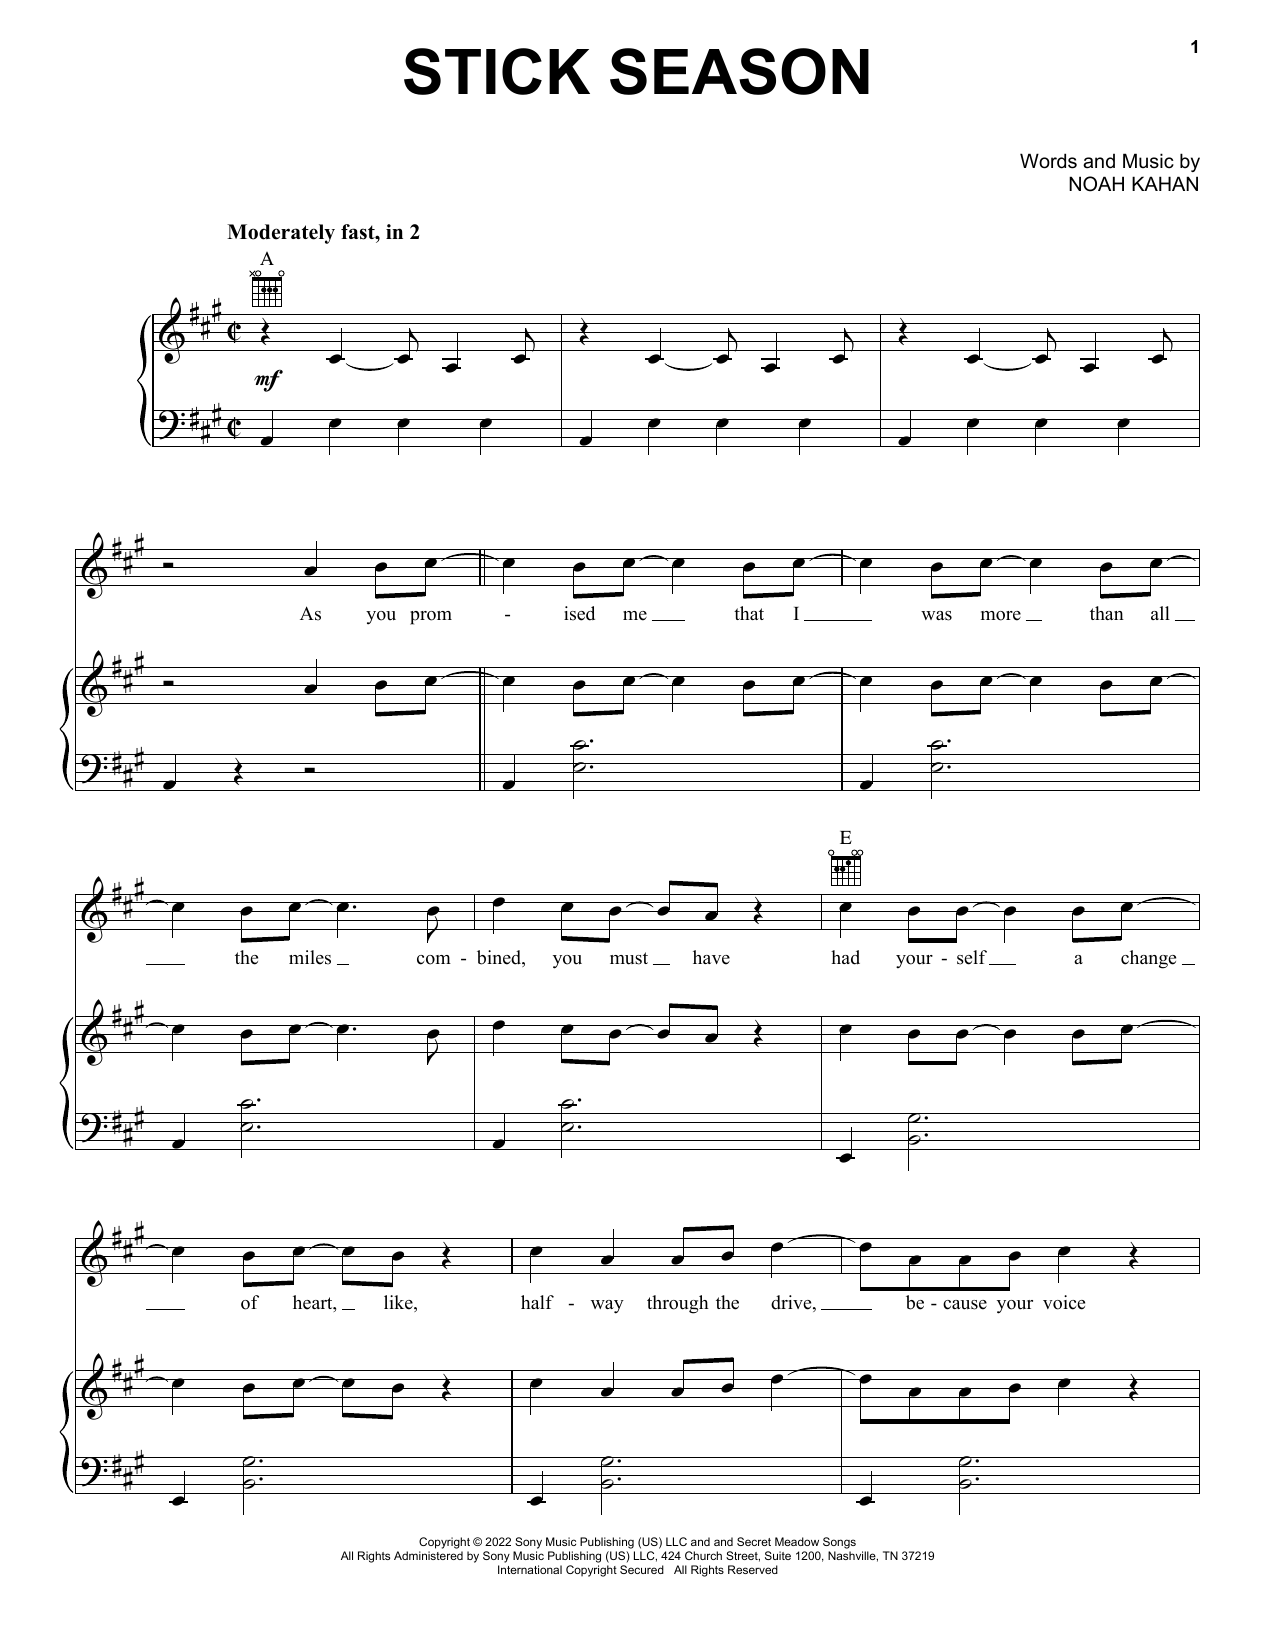 Noah Kahan Stick Season Sheet Music Notes & Chords for Piano, Vocal & Guitar Chords (Right-Hand Melody) - Download or Print PDF